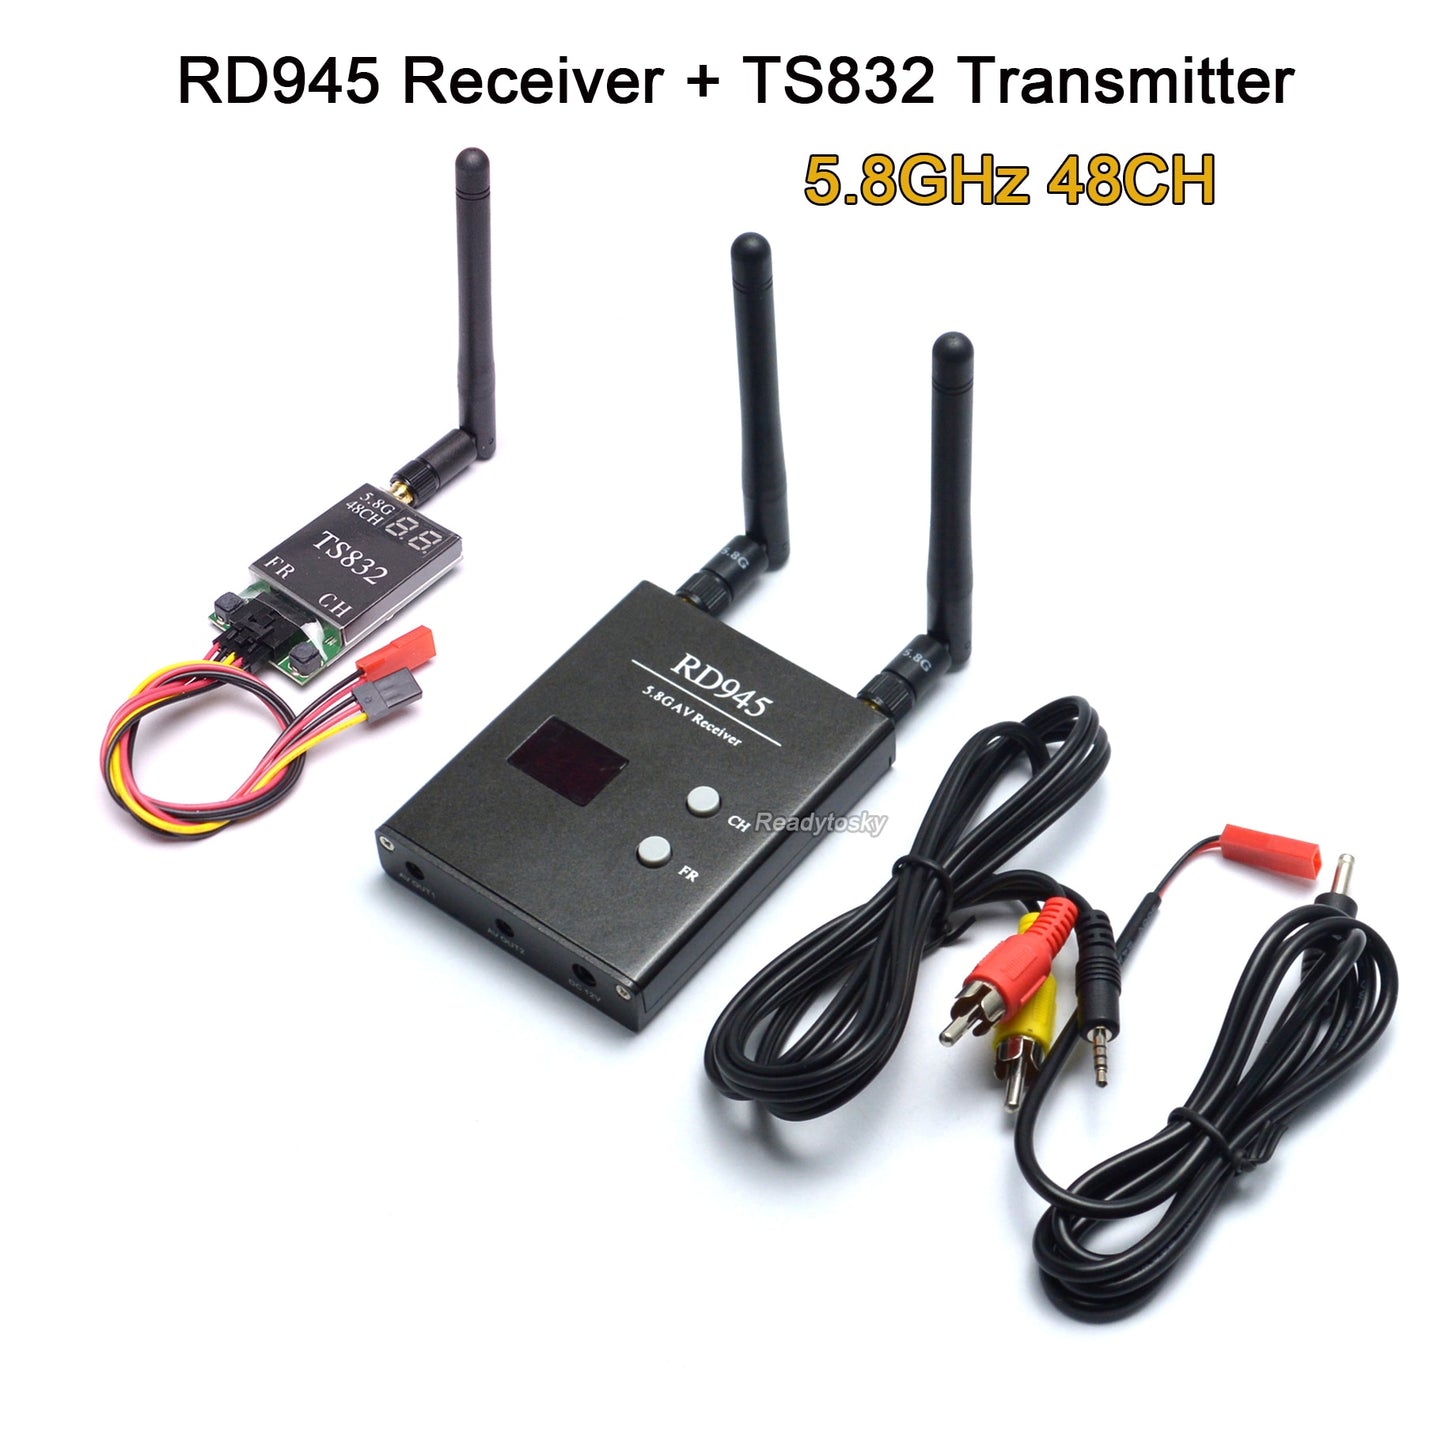 RD945 Receiver + TS832 Transmitter 5.8GHz 48CH